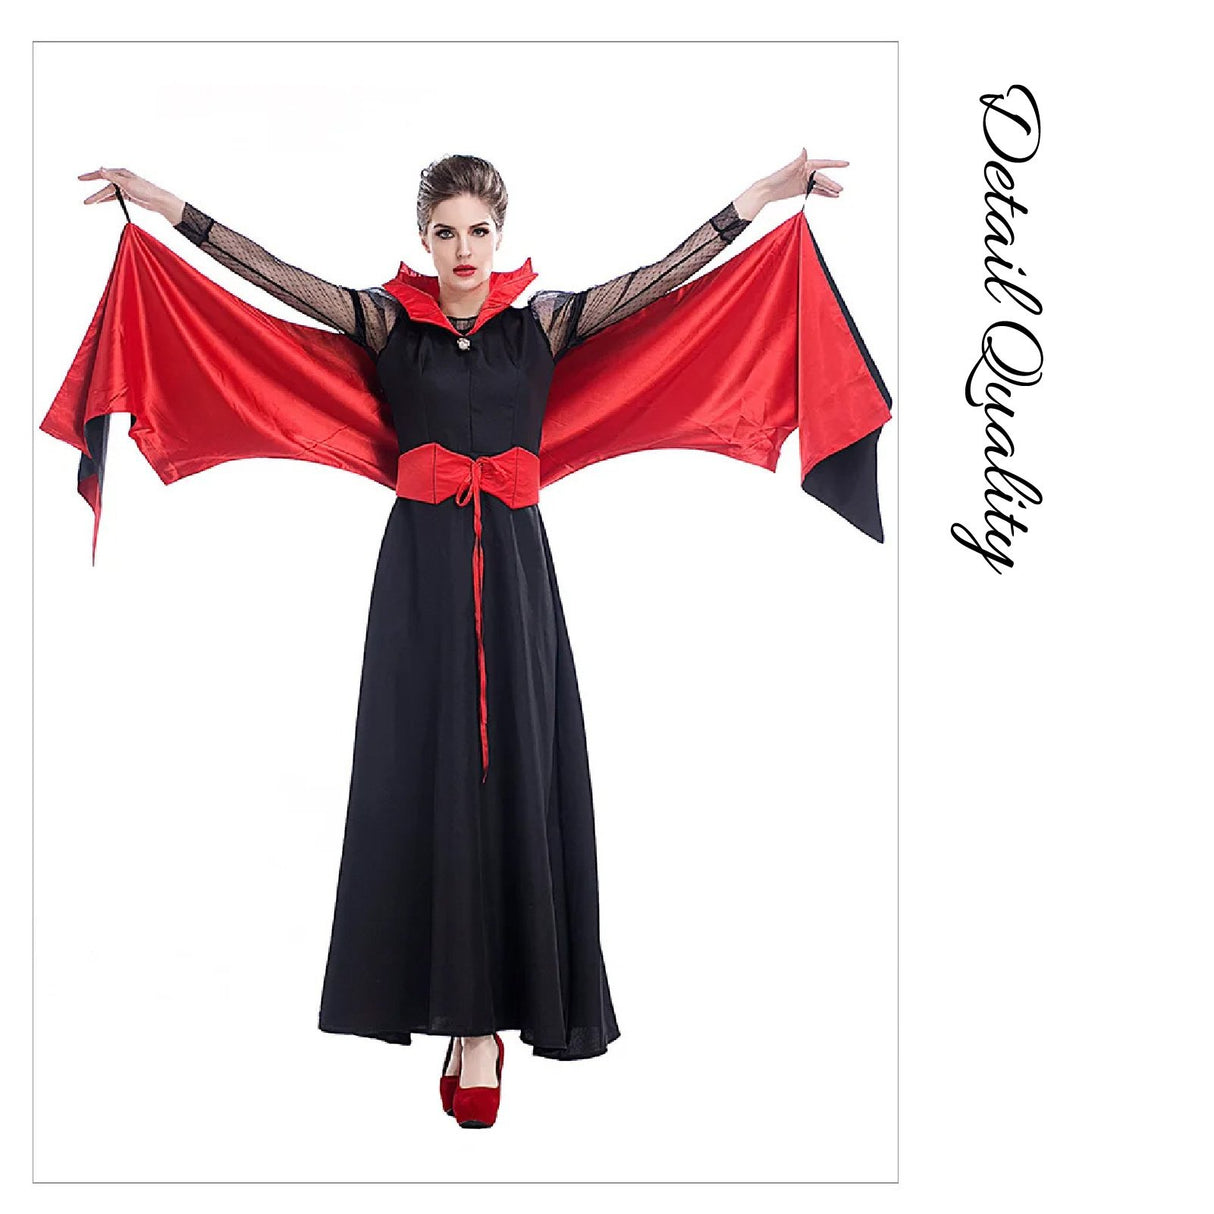 Vampire Witch Costume